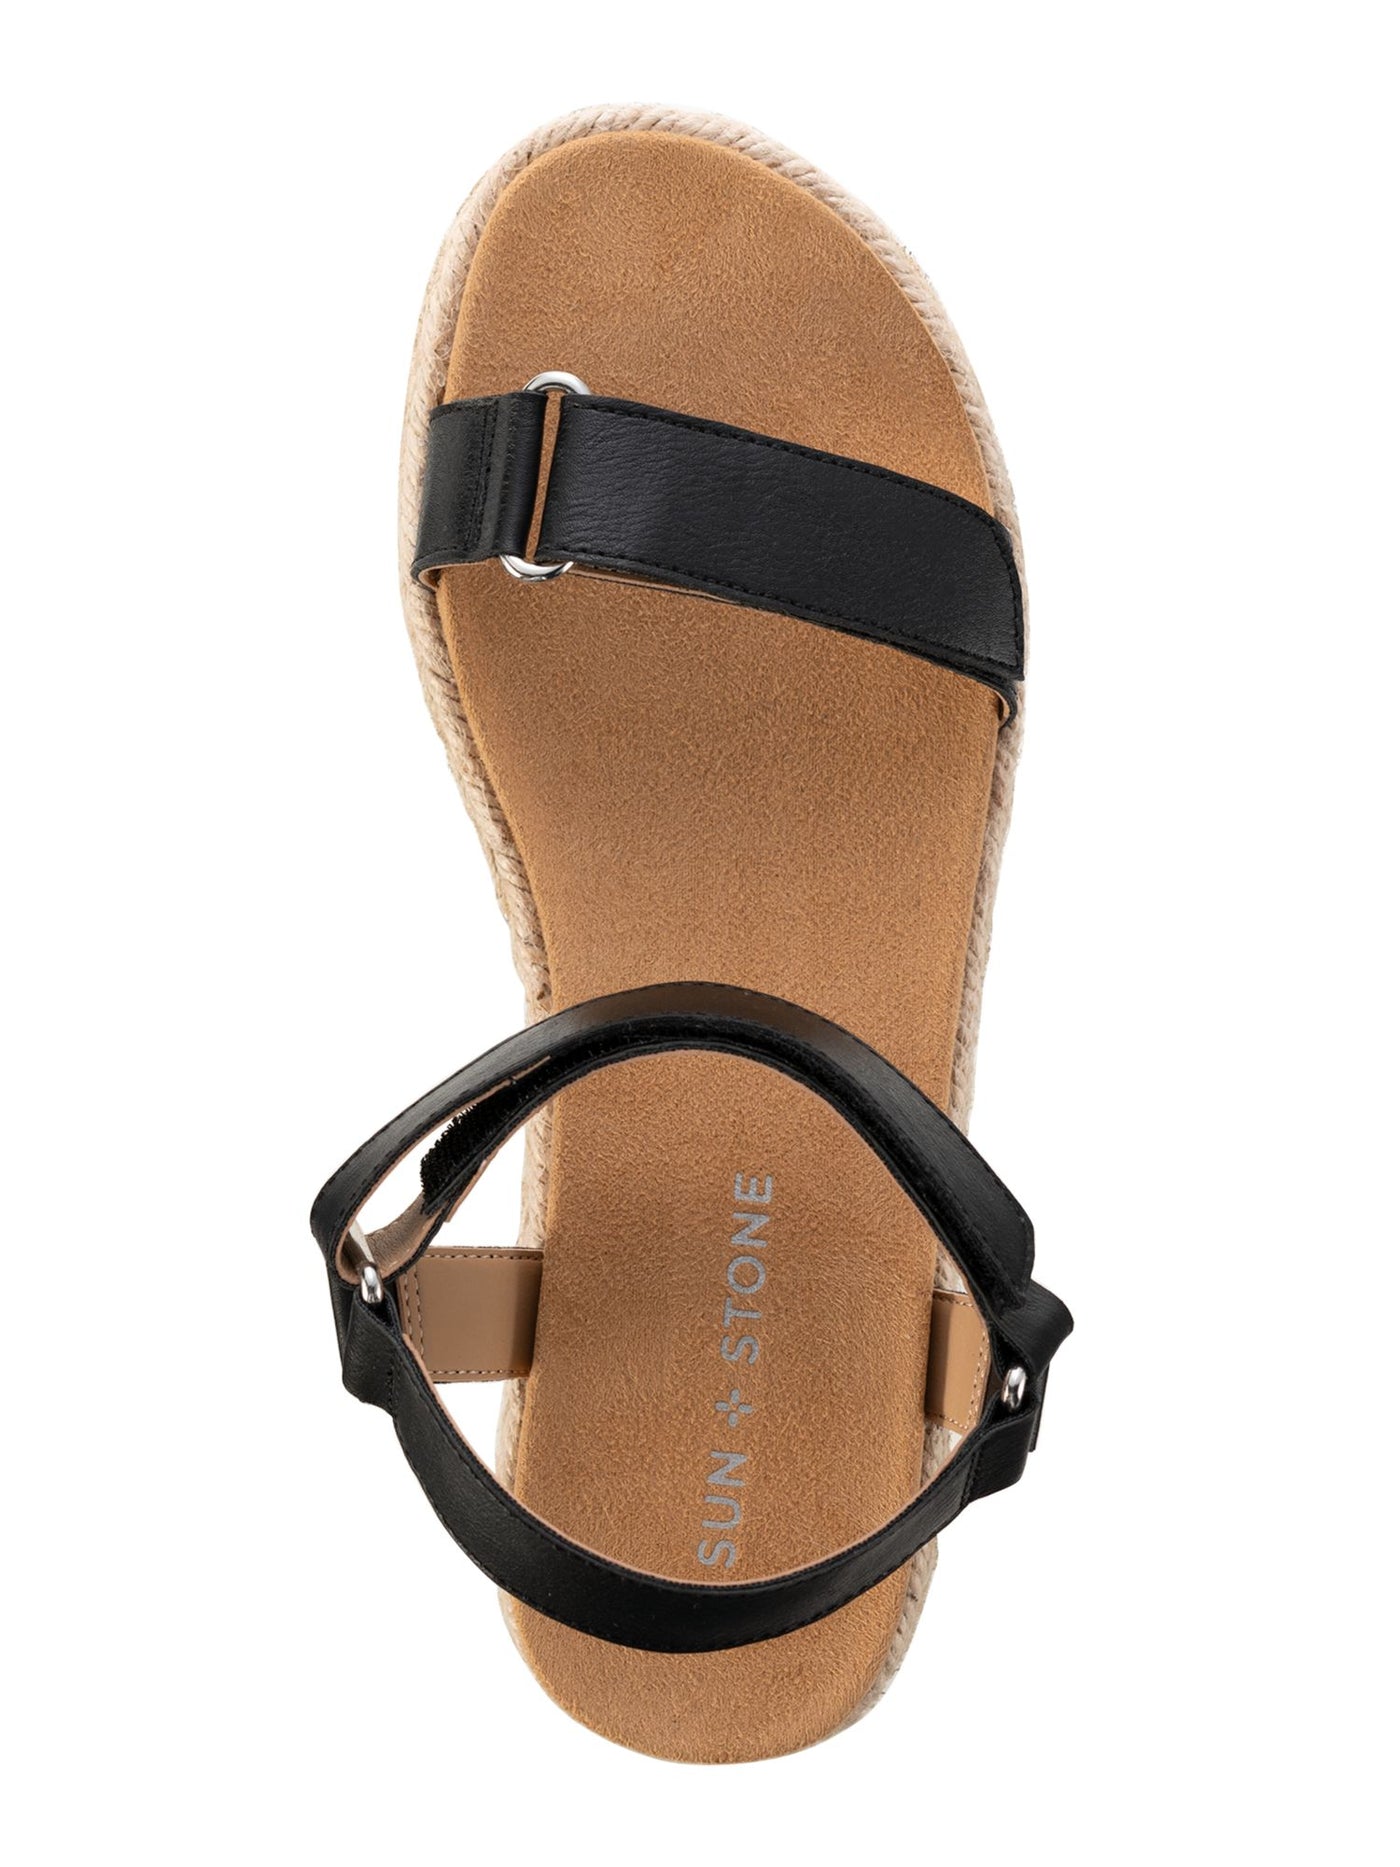 SUN STONE Womens Black Snake Platform 1-1/2" Metallic Hardware Ankle Strap Braided Rylaan Round Toe Wedge Sandals Shoes M